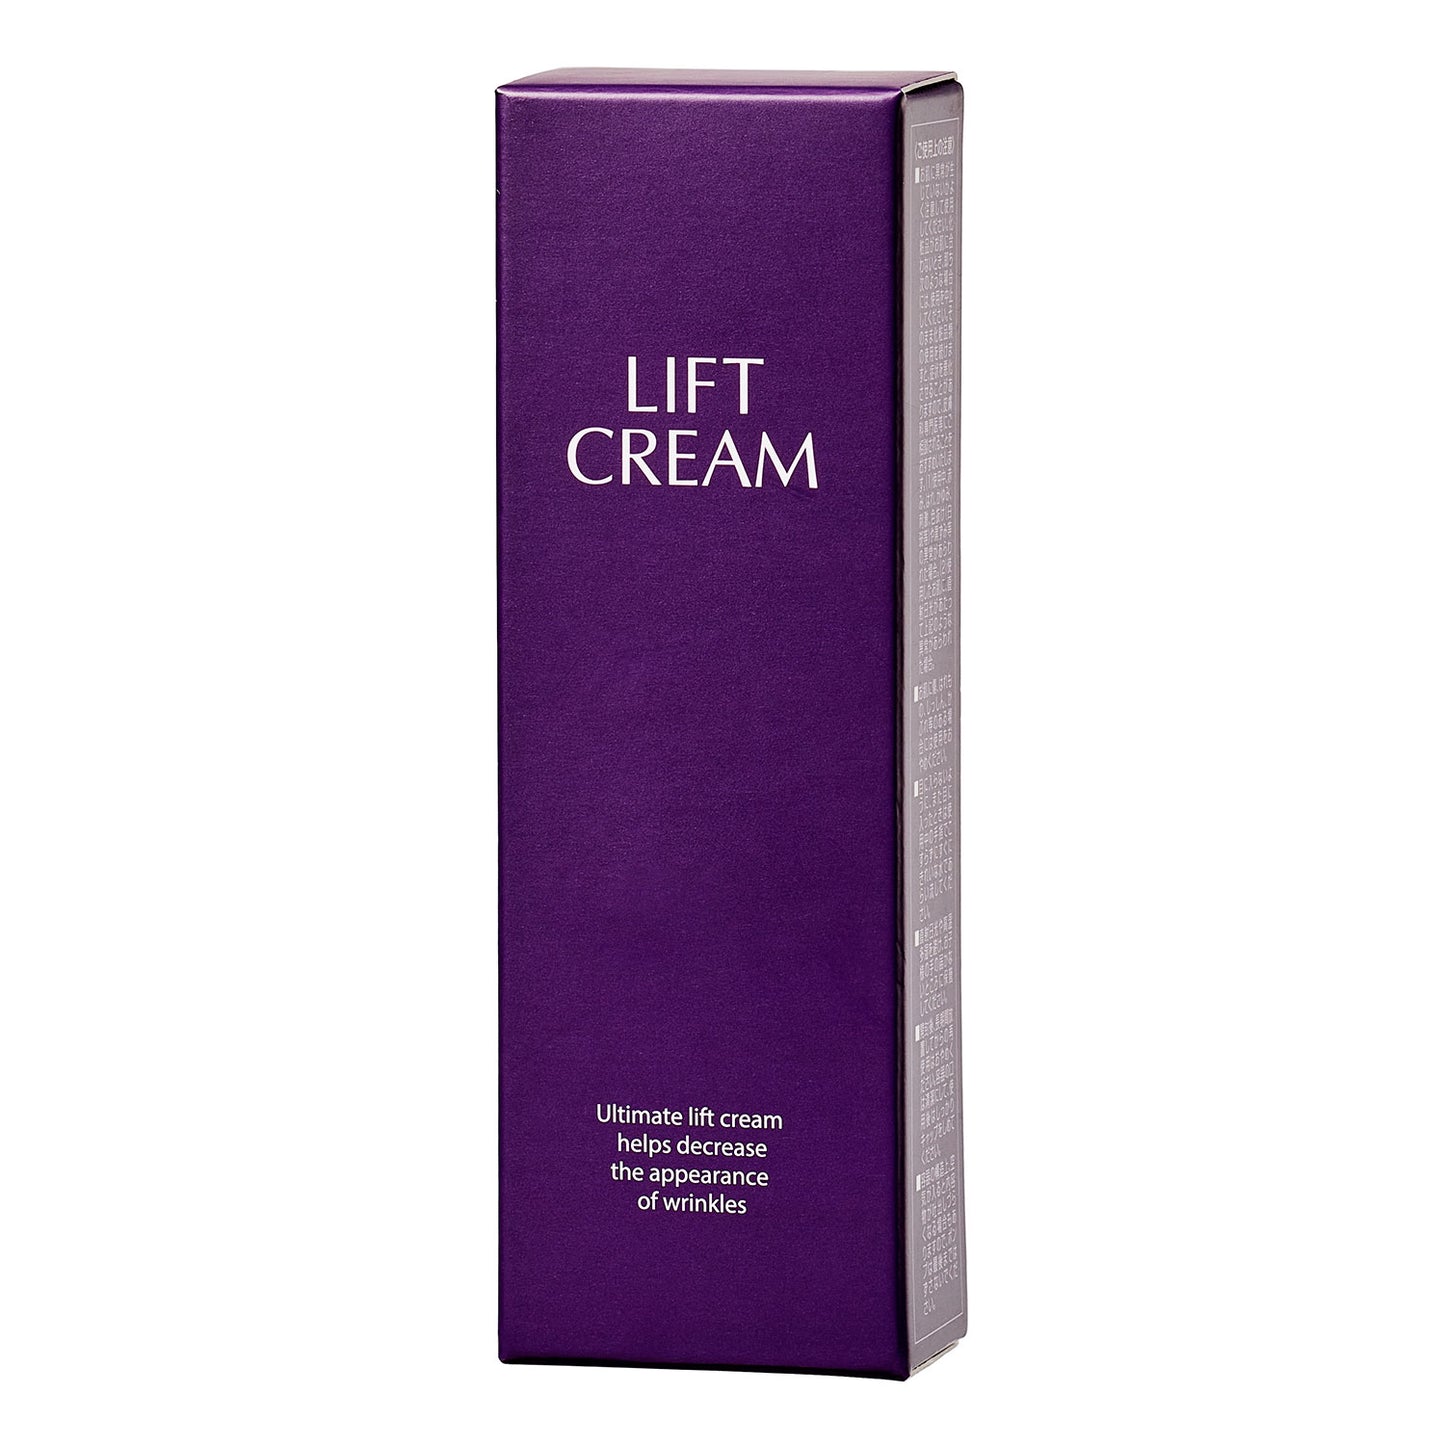 【 JLP 】Precious - Lift Cream